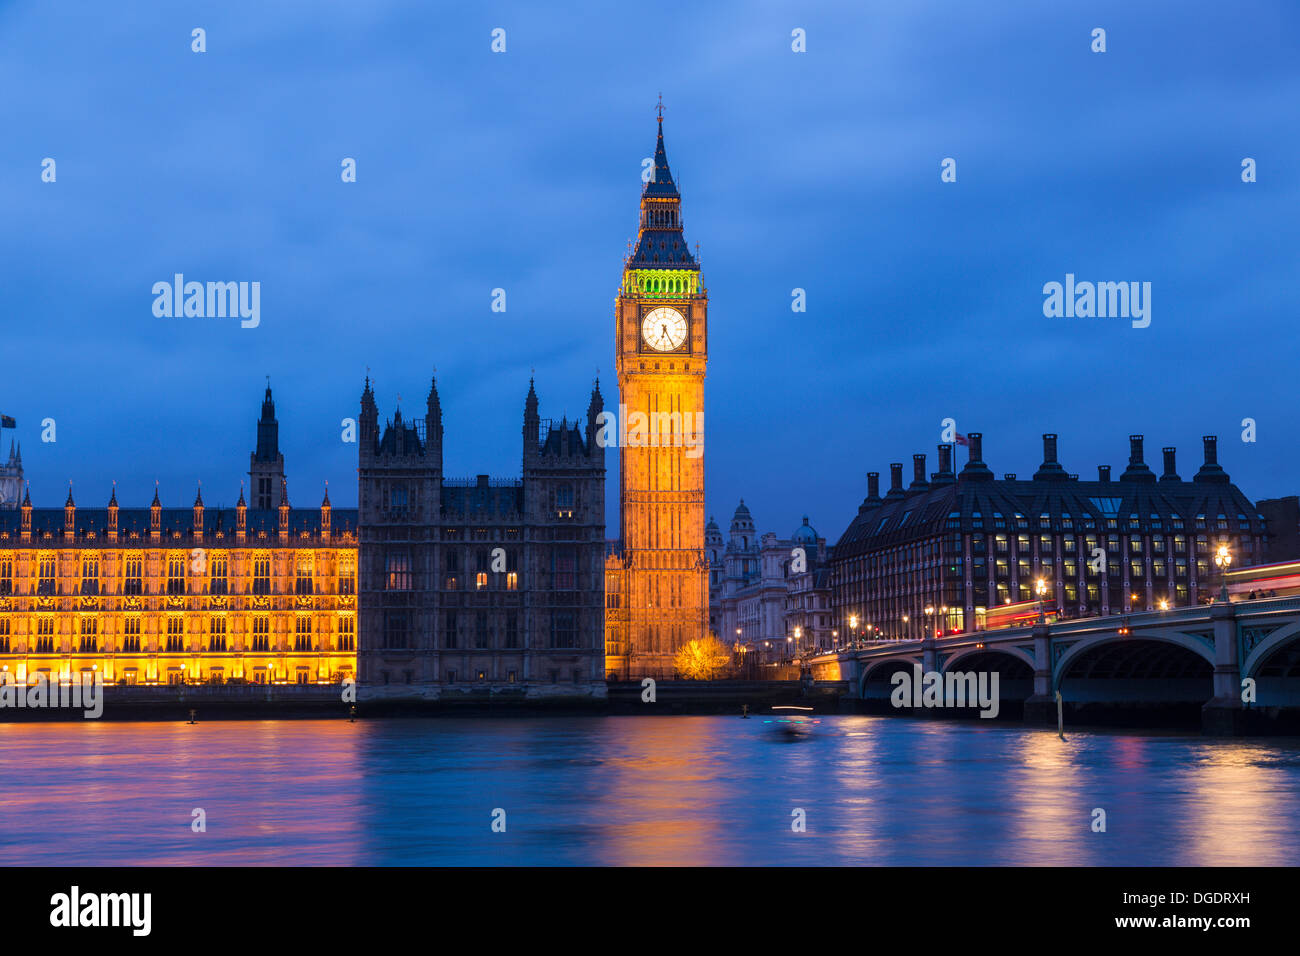 Illuminated Houses of Parliament at night London England Stock Photo